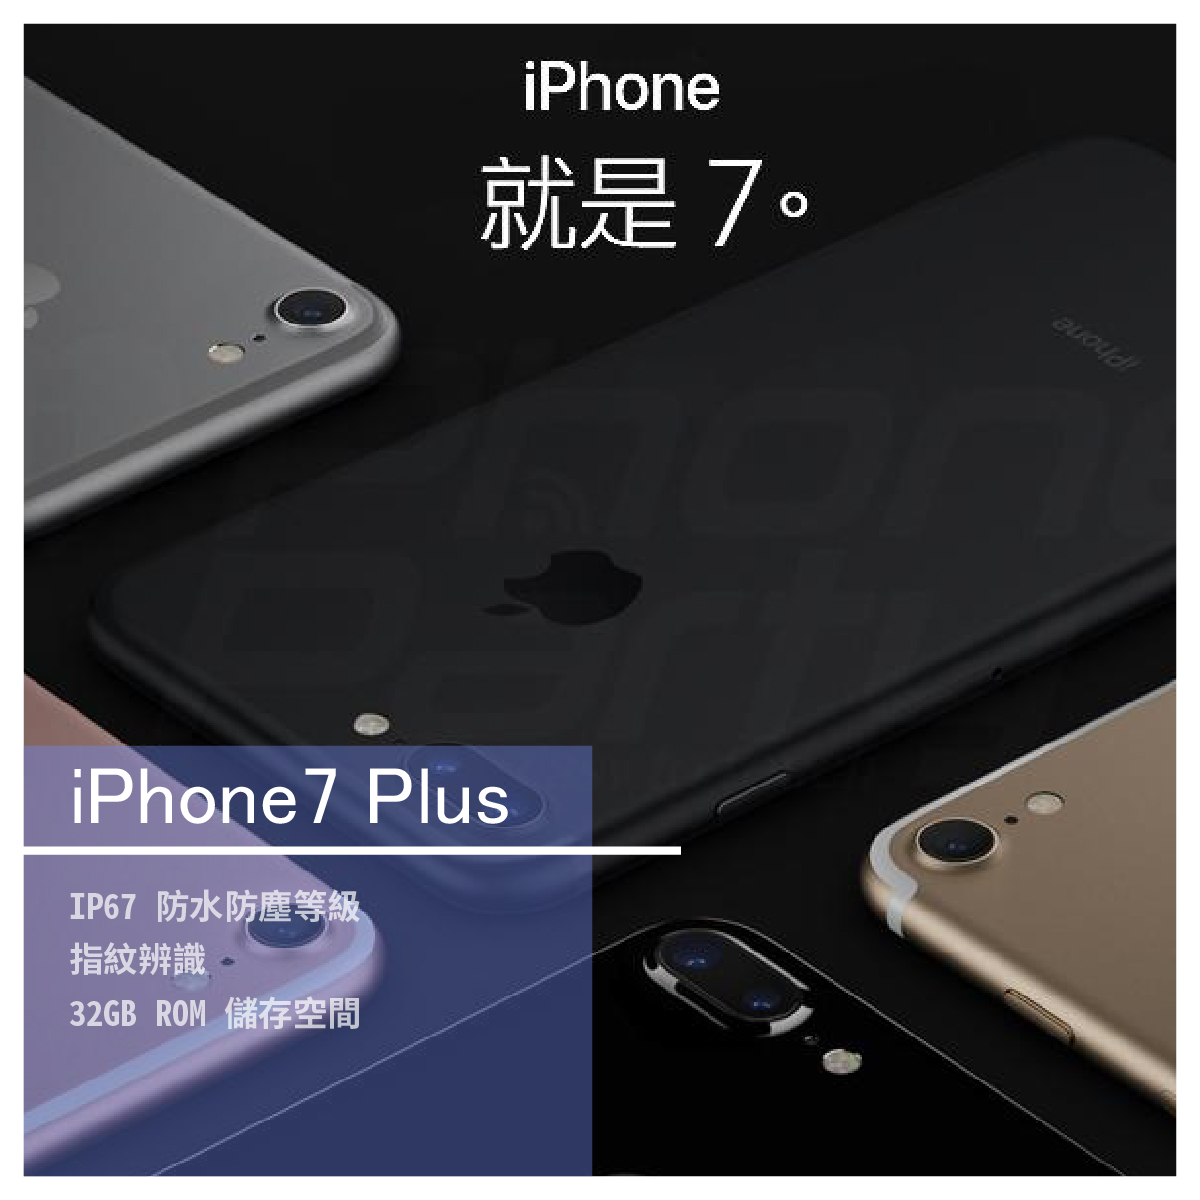 ​​​​​​​ iPhone7 Plus / 粉色 商品介紹 iPhone 首款具備 IP67 防水手機 Apple iPhone 7 Plus 32GB 配備立體聲喇叭 外型採用鋁合金搭配全玻璃設計